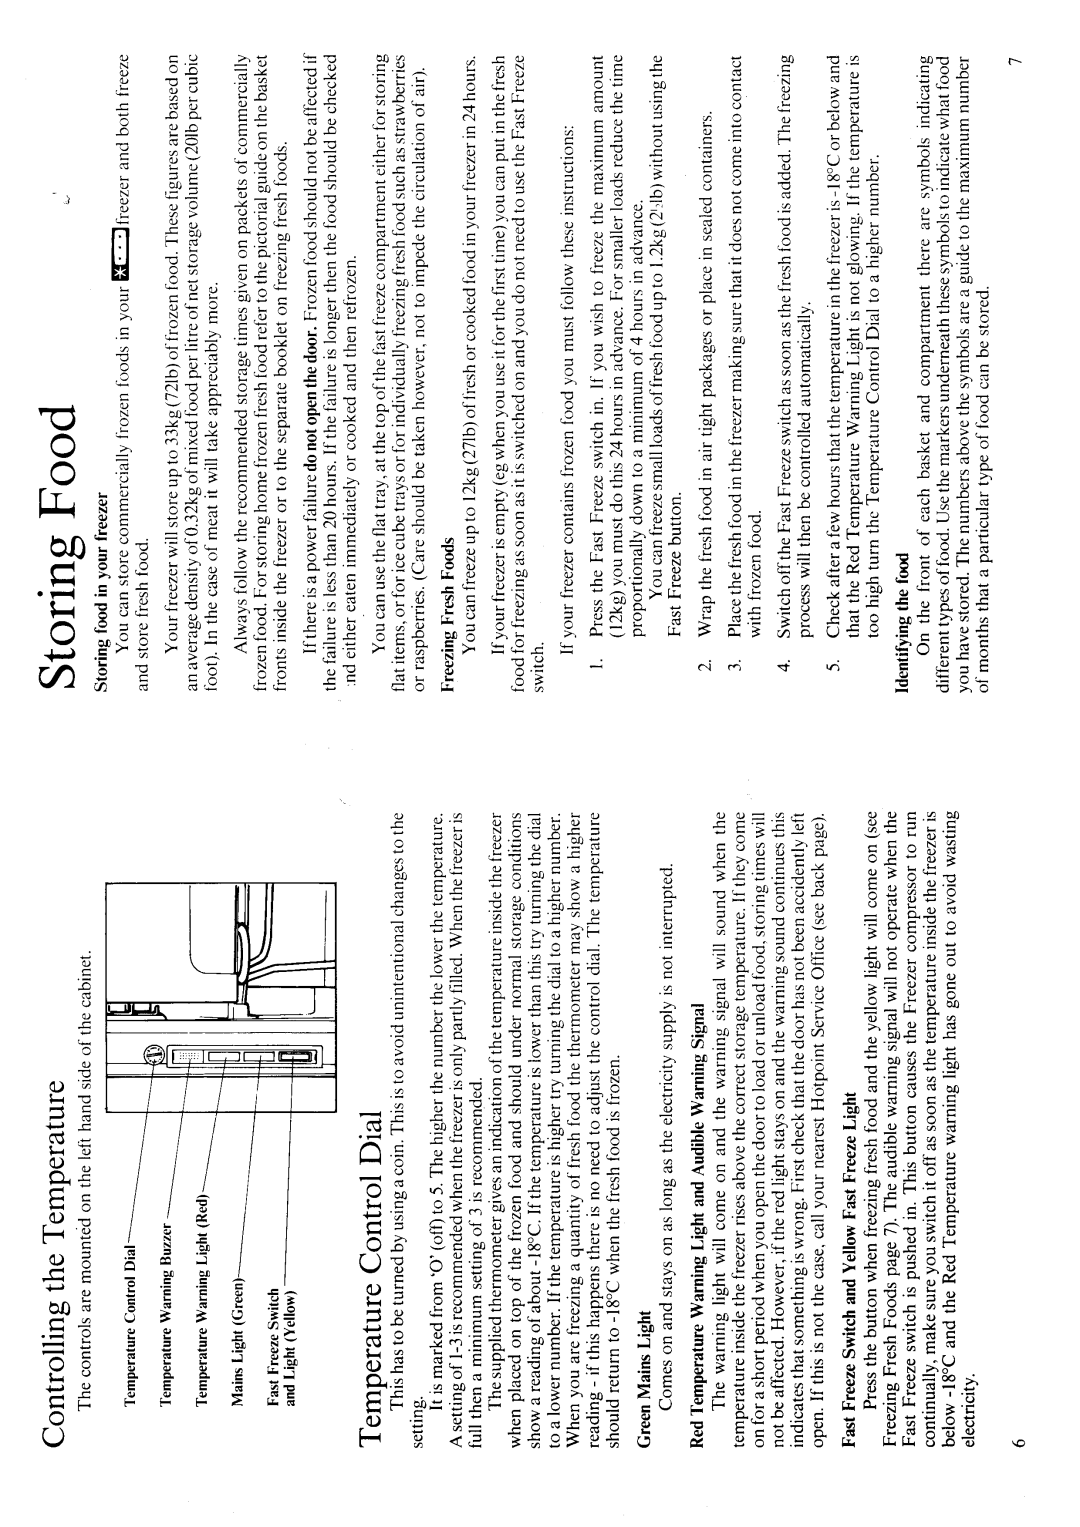 Hotpoint 6950 manual 